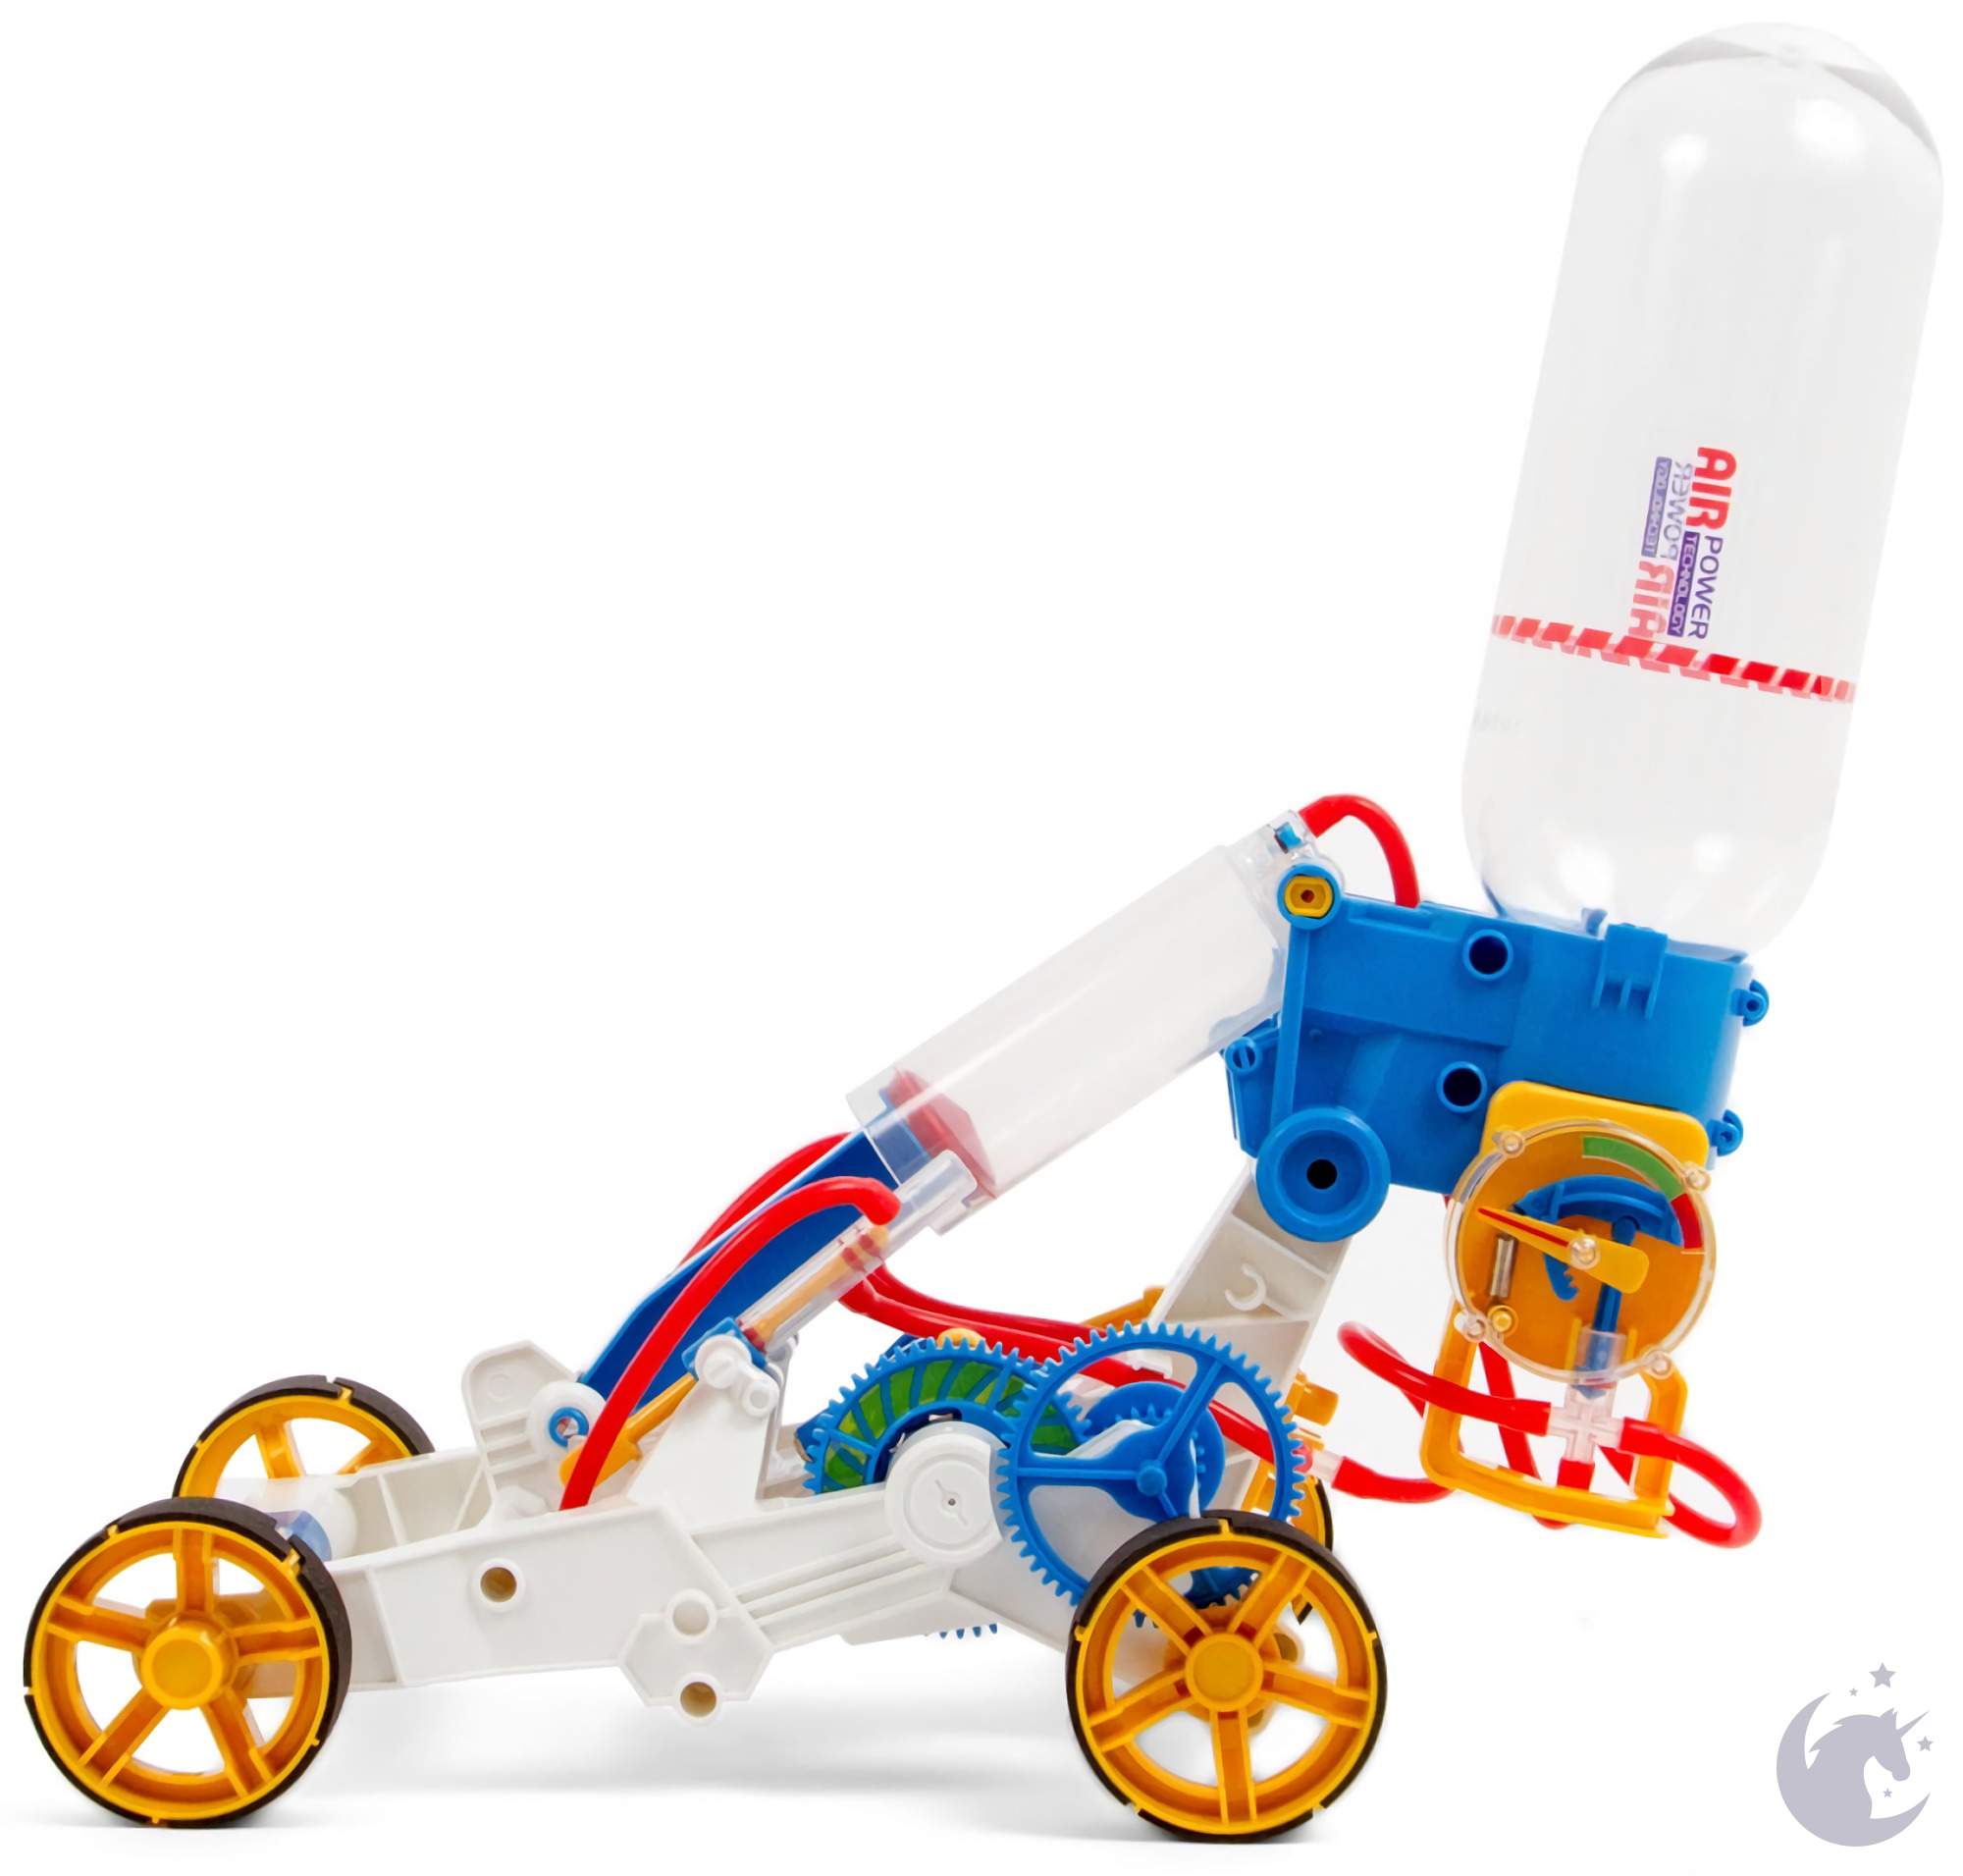 unicorntoys cic kits air power engine car educational robot kit engineering stem toys for kids CIC21-631